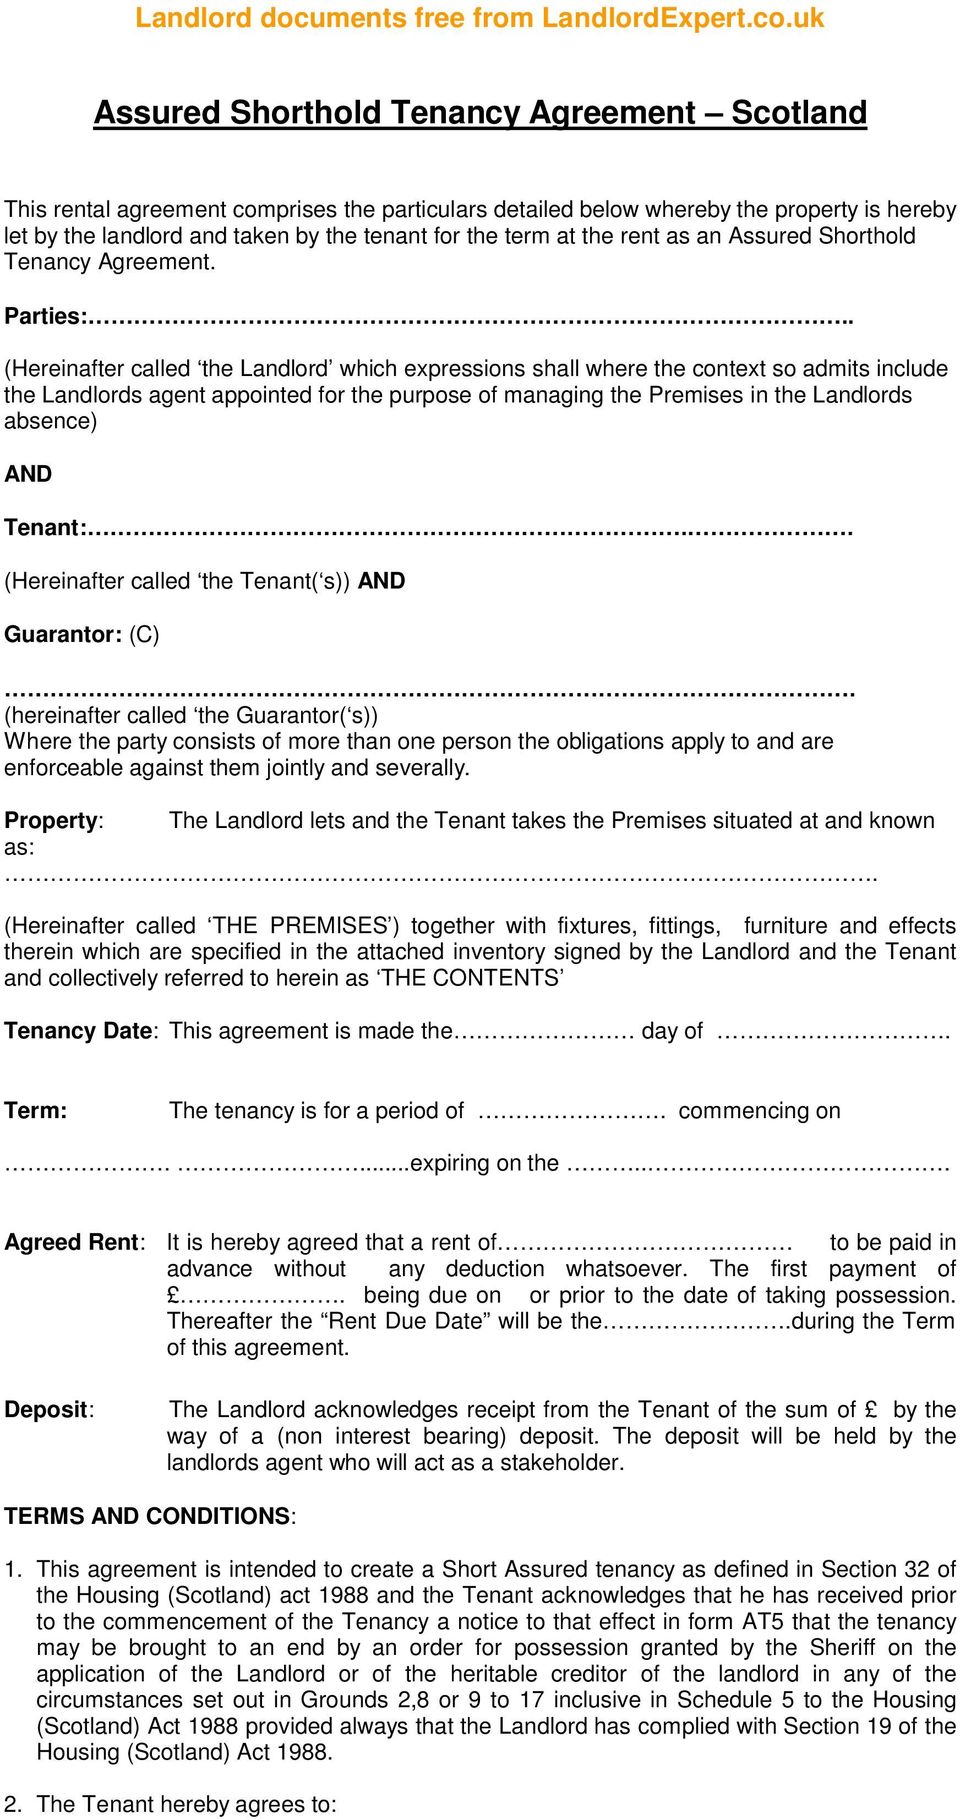 Assured Shorthold Tenancy Agreement Scotland - PDF Free Download Inside scottish secure tenancy agreement template